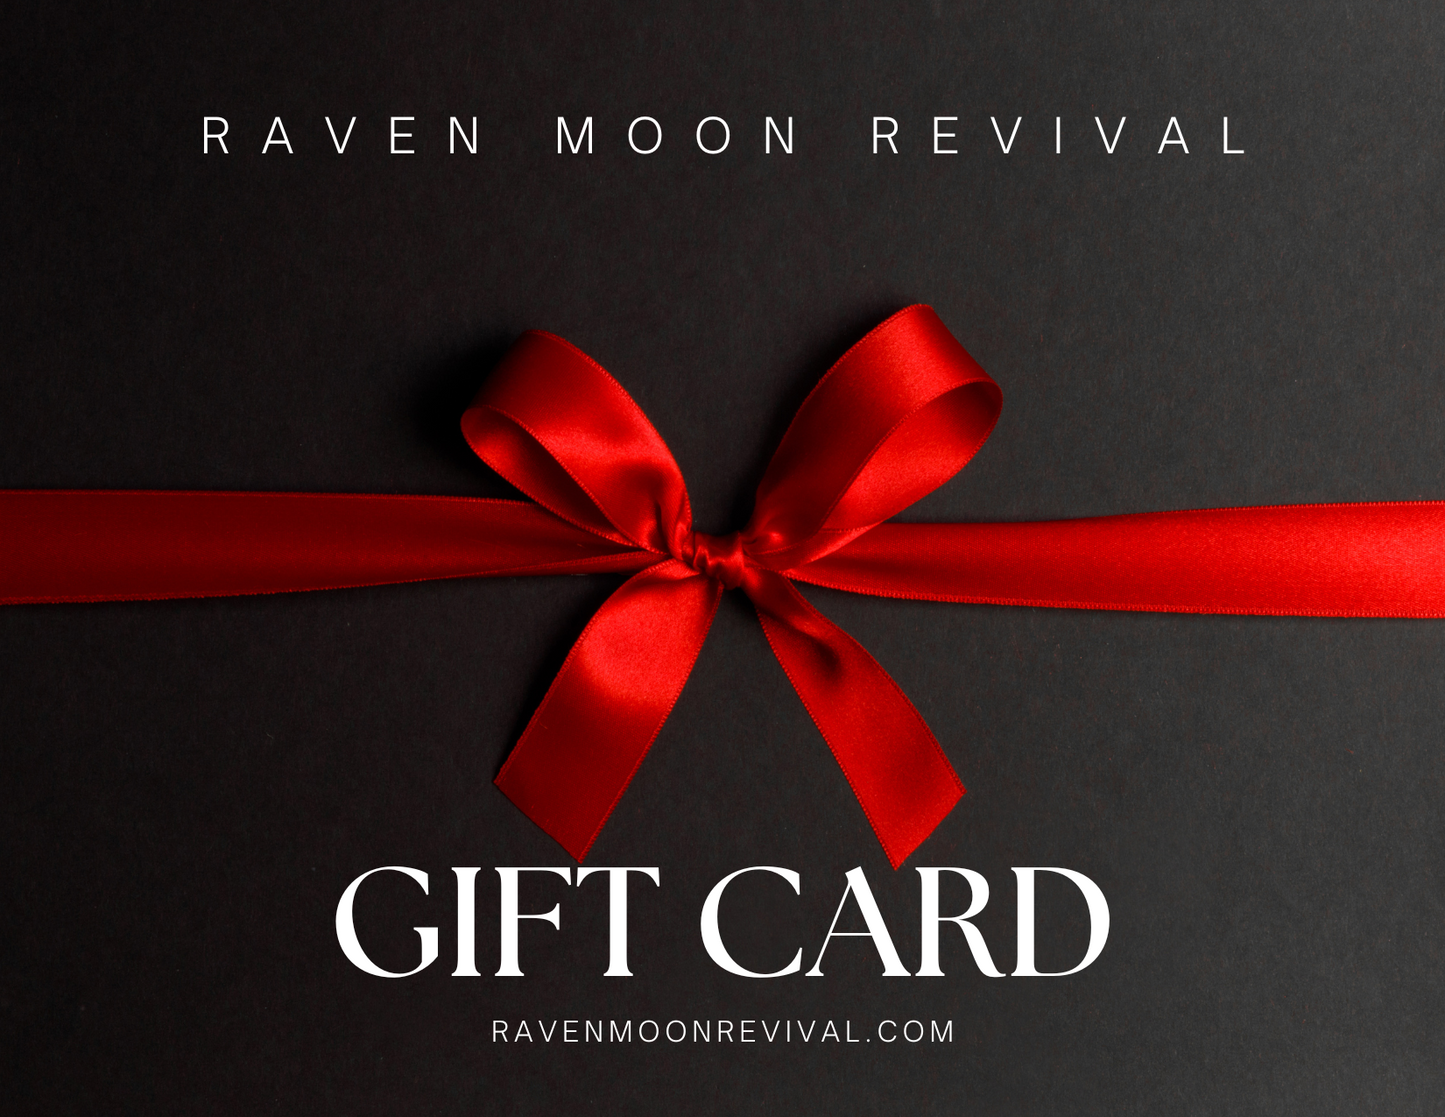 Raven Moon Revival Gift Card